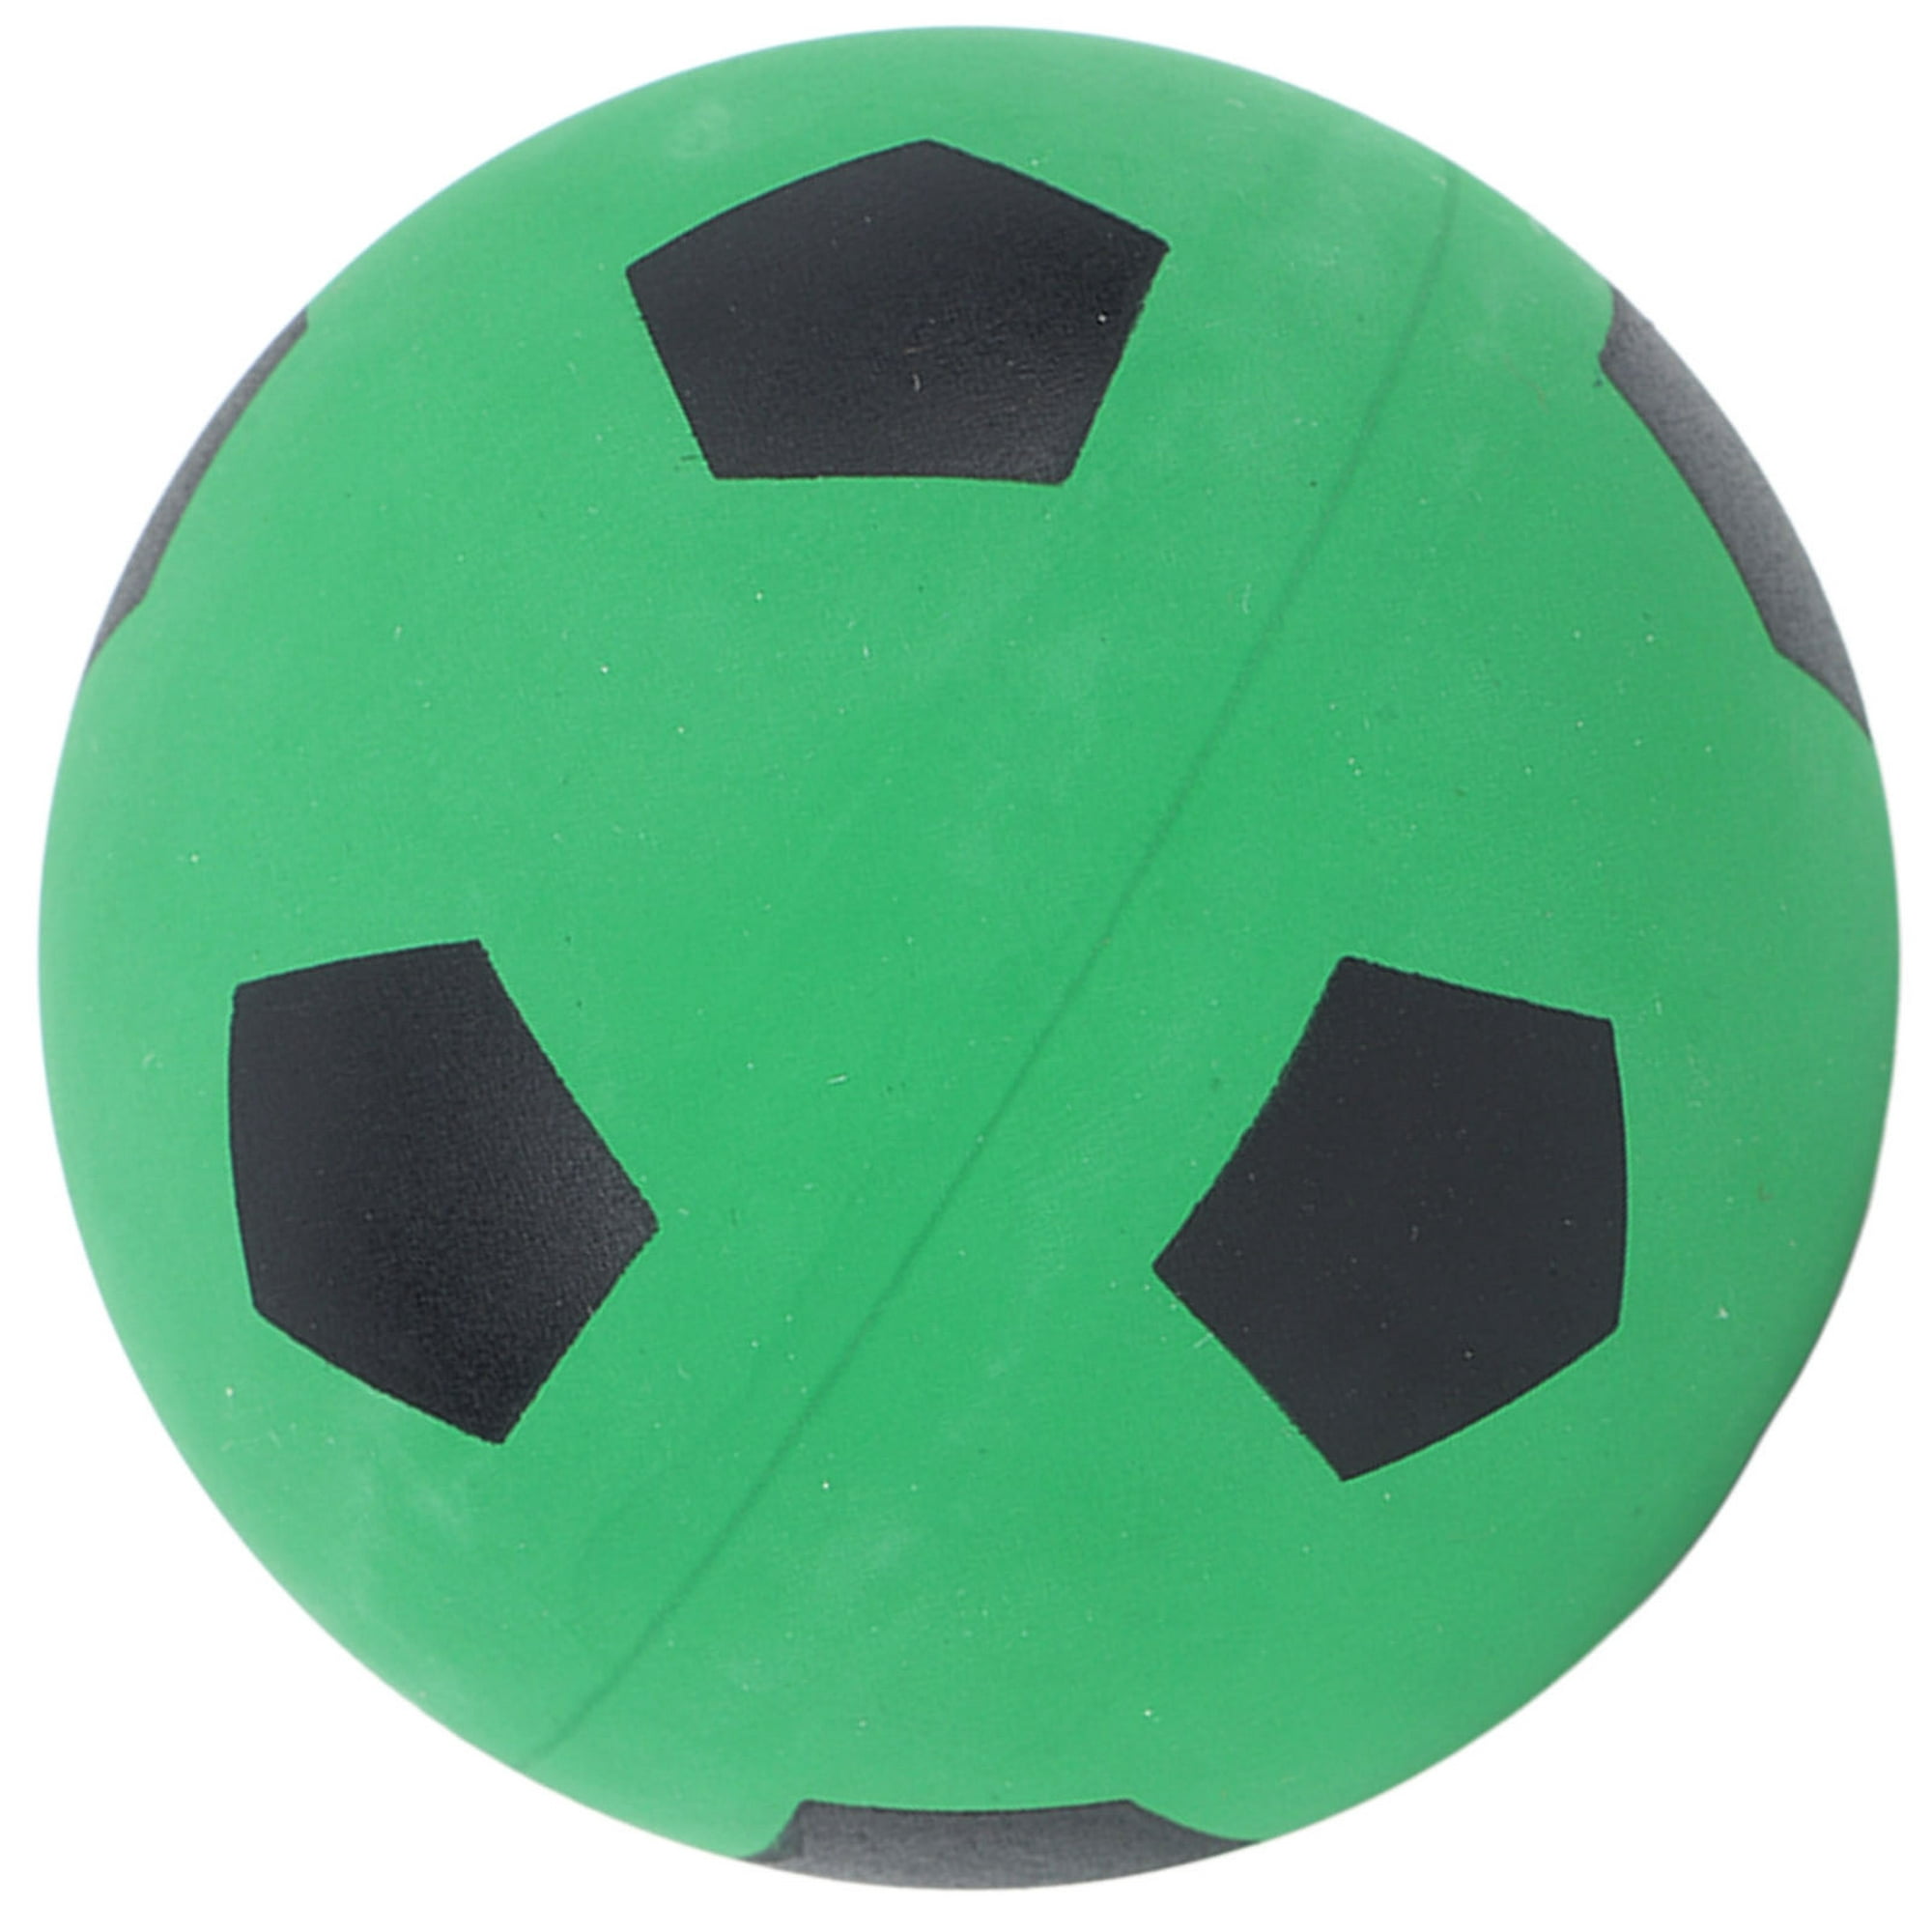 GENERICO Pelota De Fútbol Infantil con Diseño Color Verde